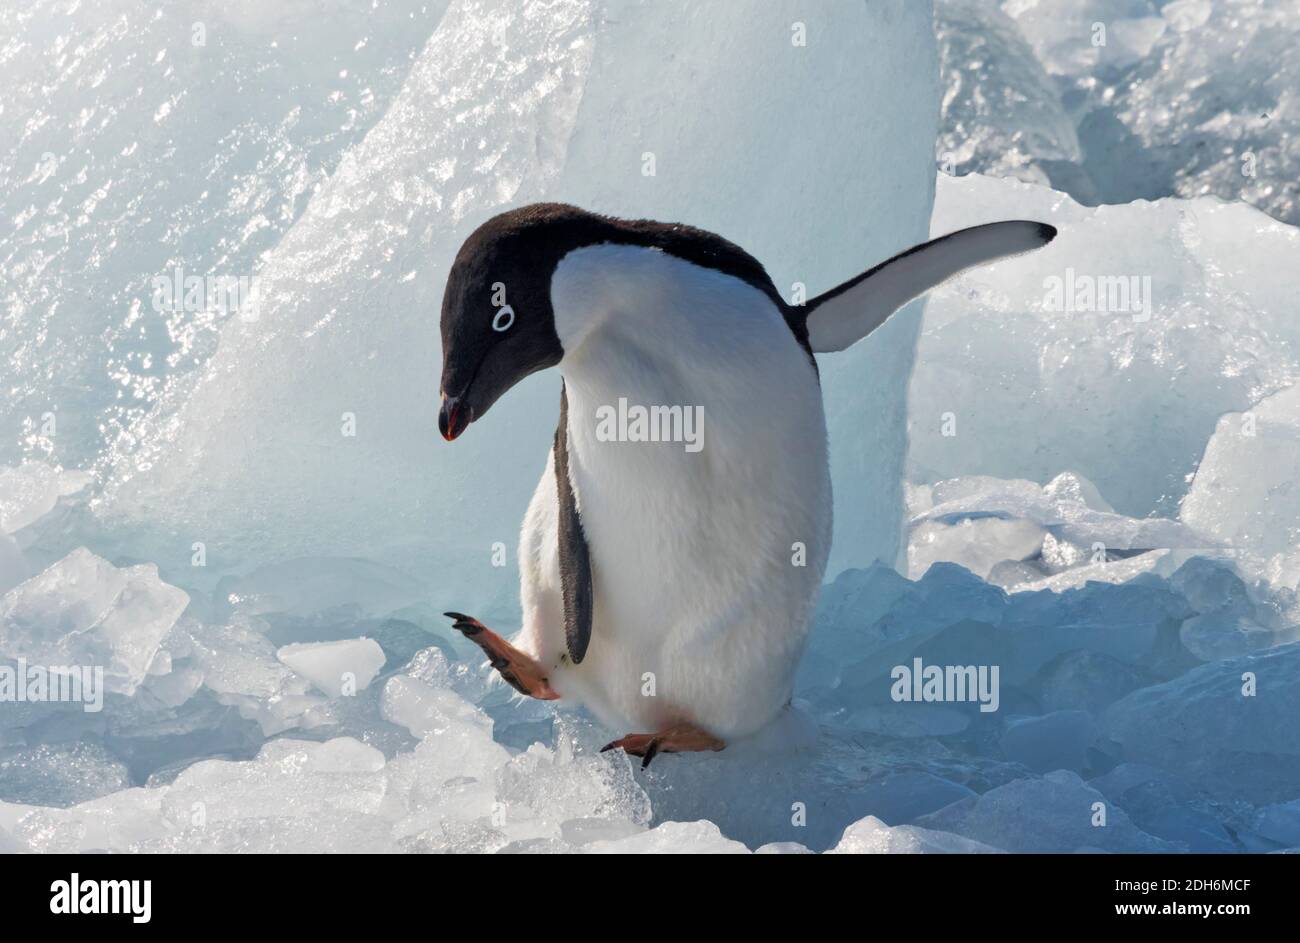 Adelie penguin on ice, Pleneau Island, South Atlantic Ocean, Antarctica Stock Photo